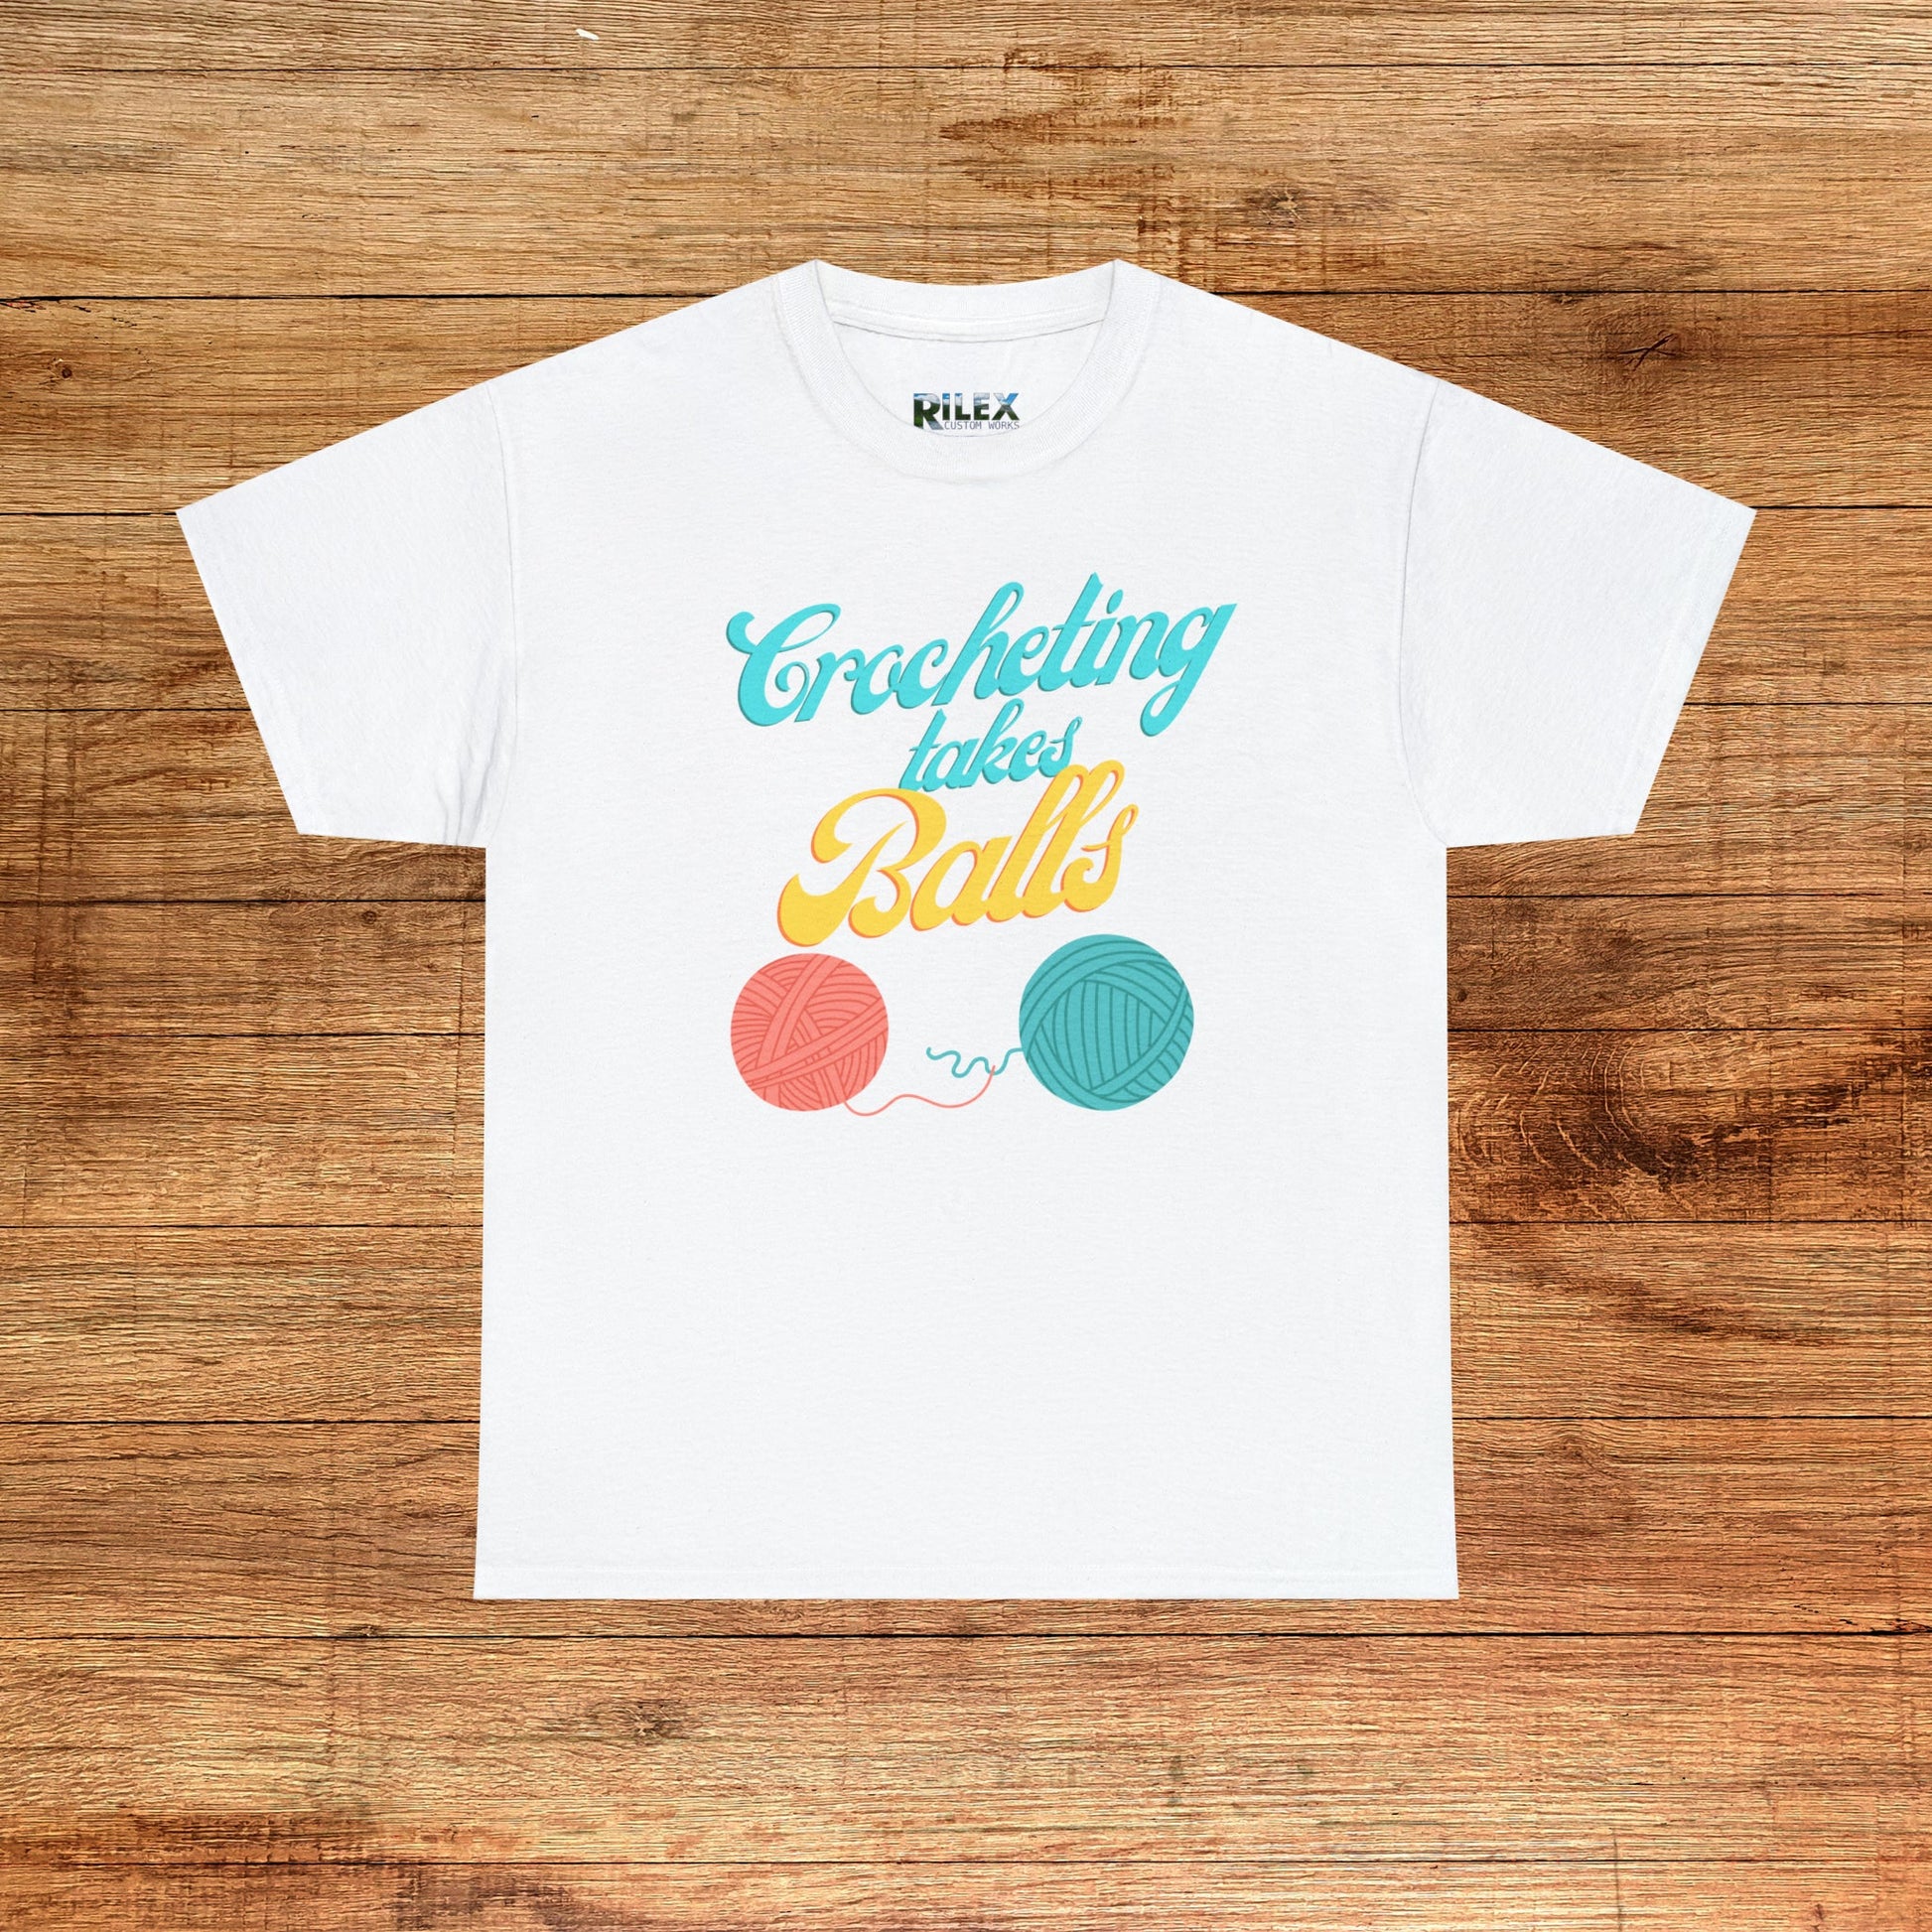 Crocheting Takes Balls Shirt - Extended Sizes Rilex Custom Works